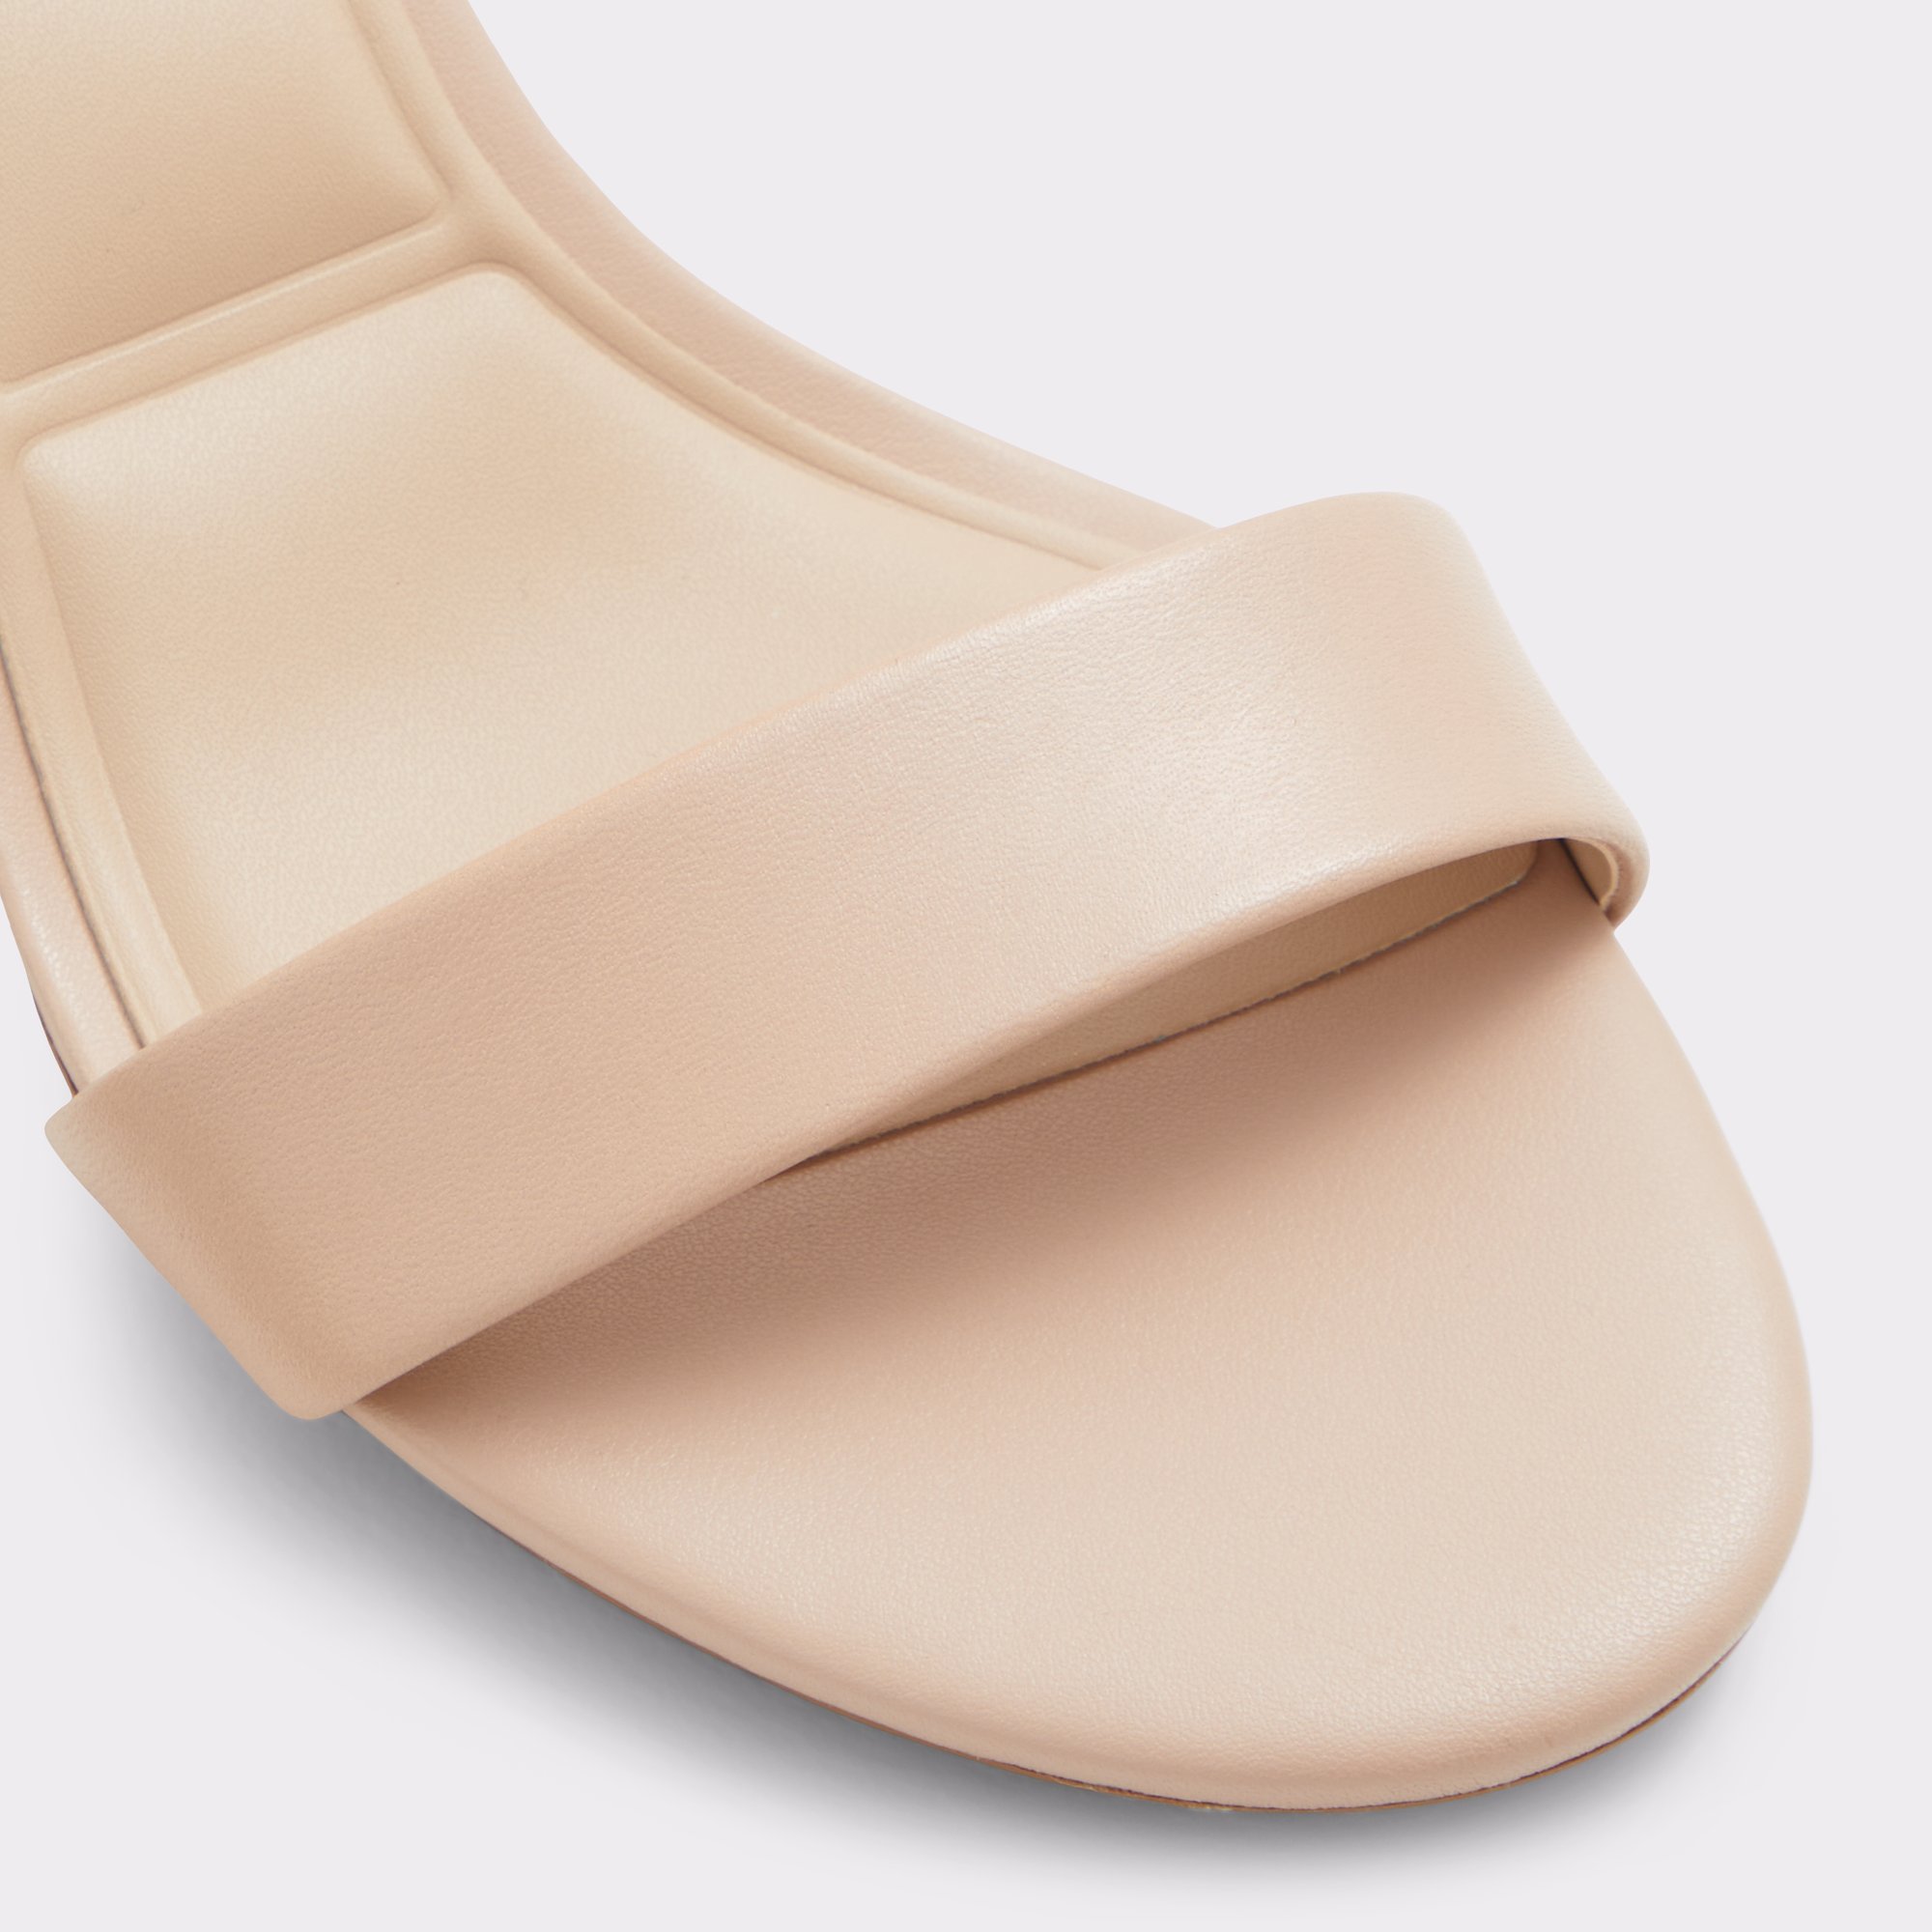 Pristine Bone Leather Smooth Women's Strappy sandals | ALDO US